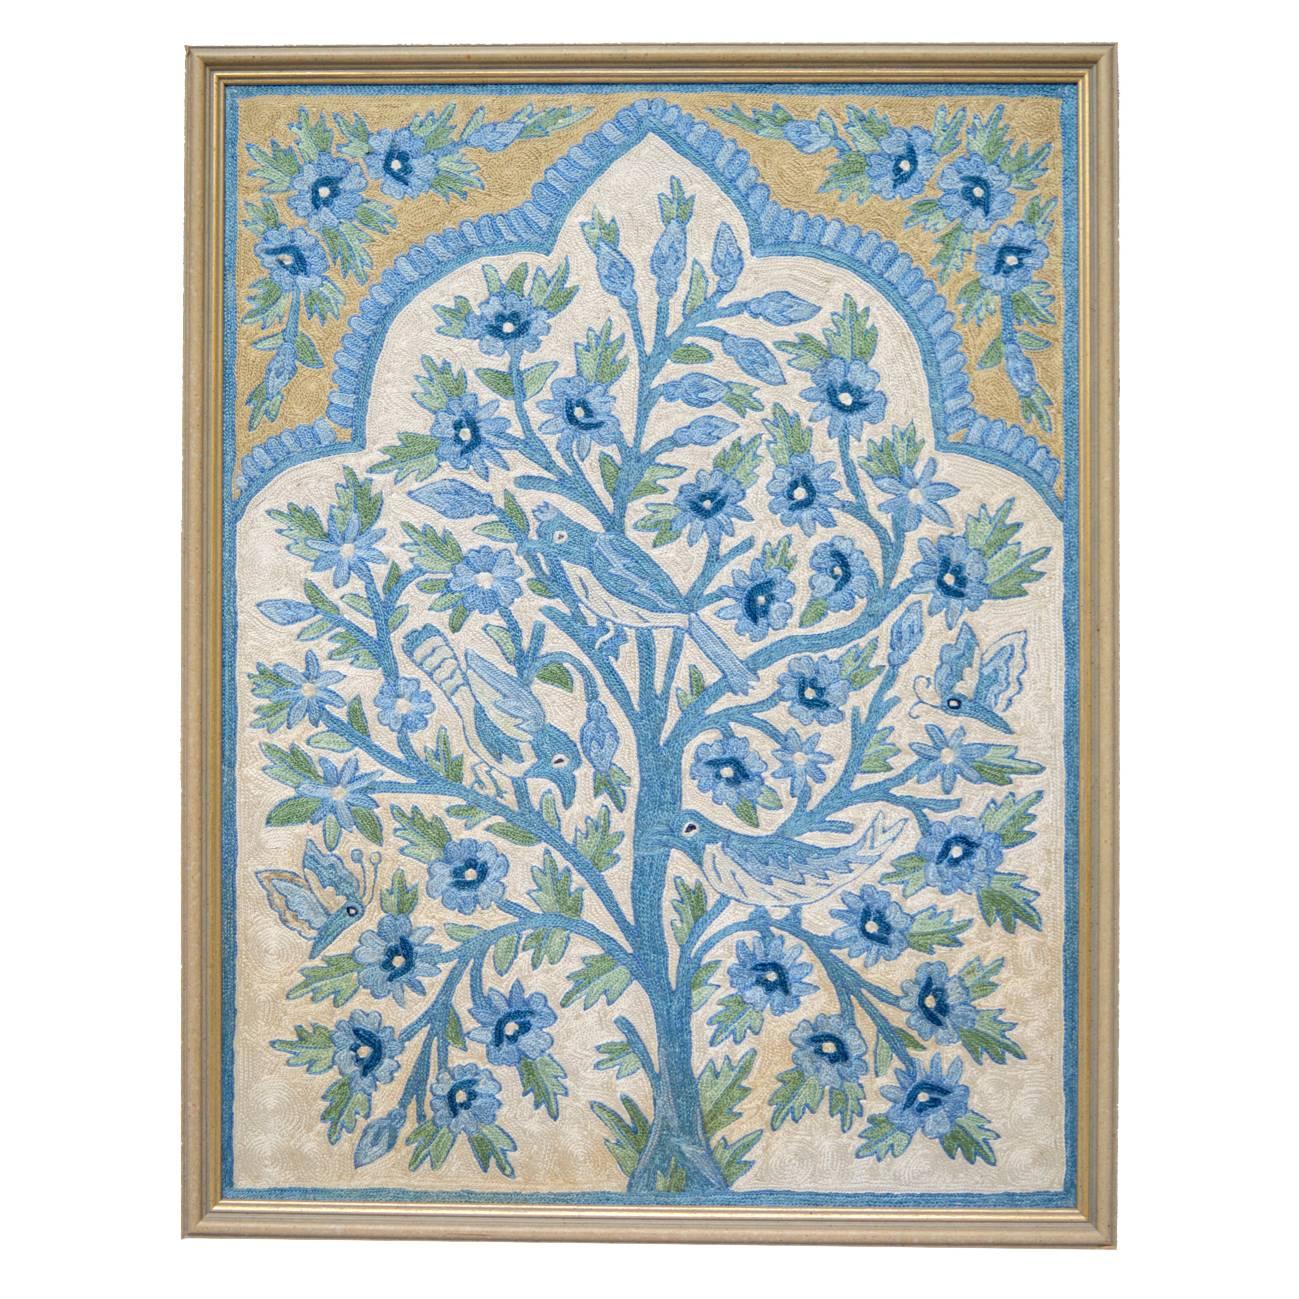 Silk Uzbekistan Suzani Crewelwork Blue and White "Tree of Life" Panel with Birds